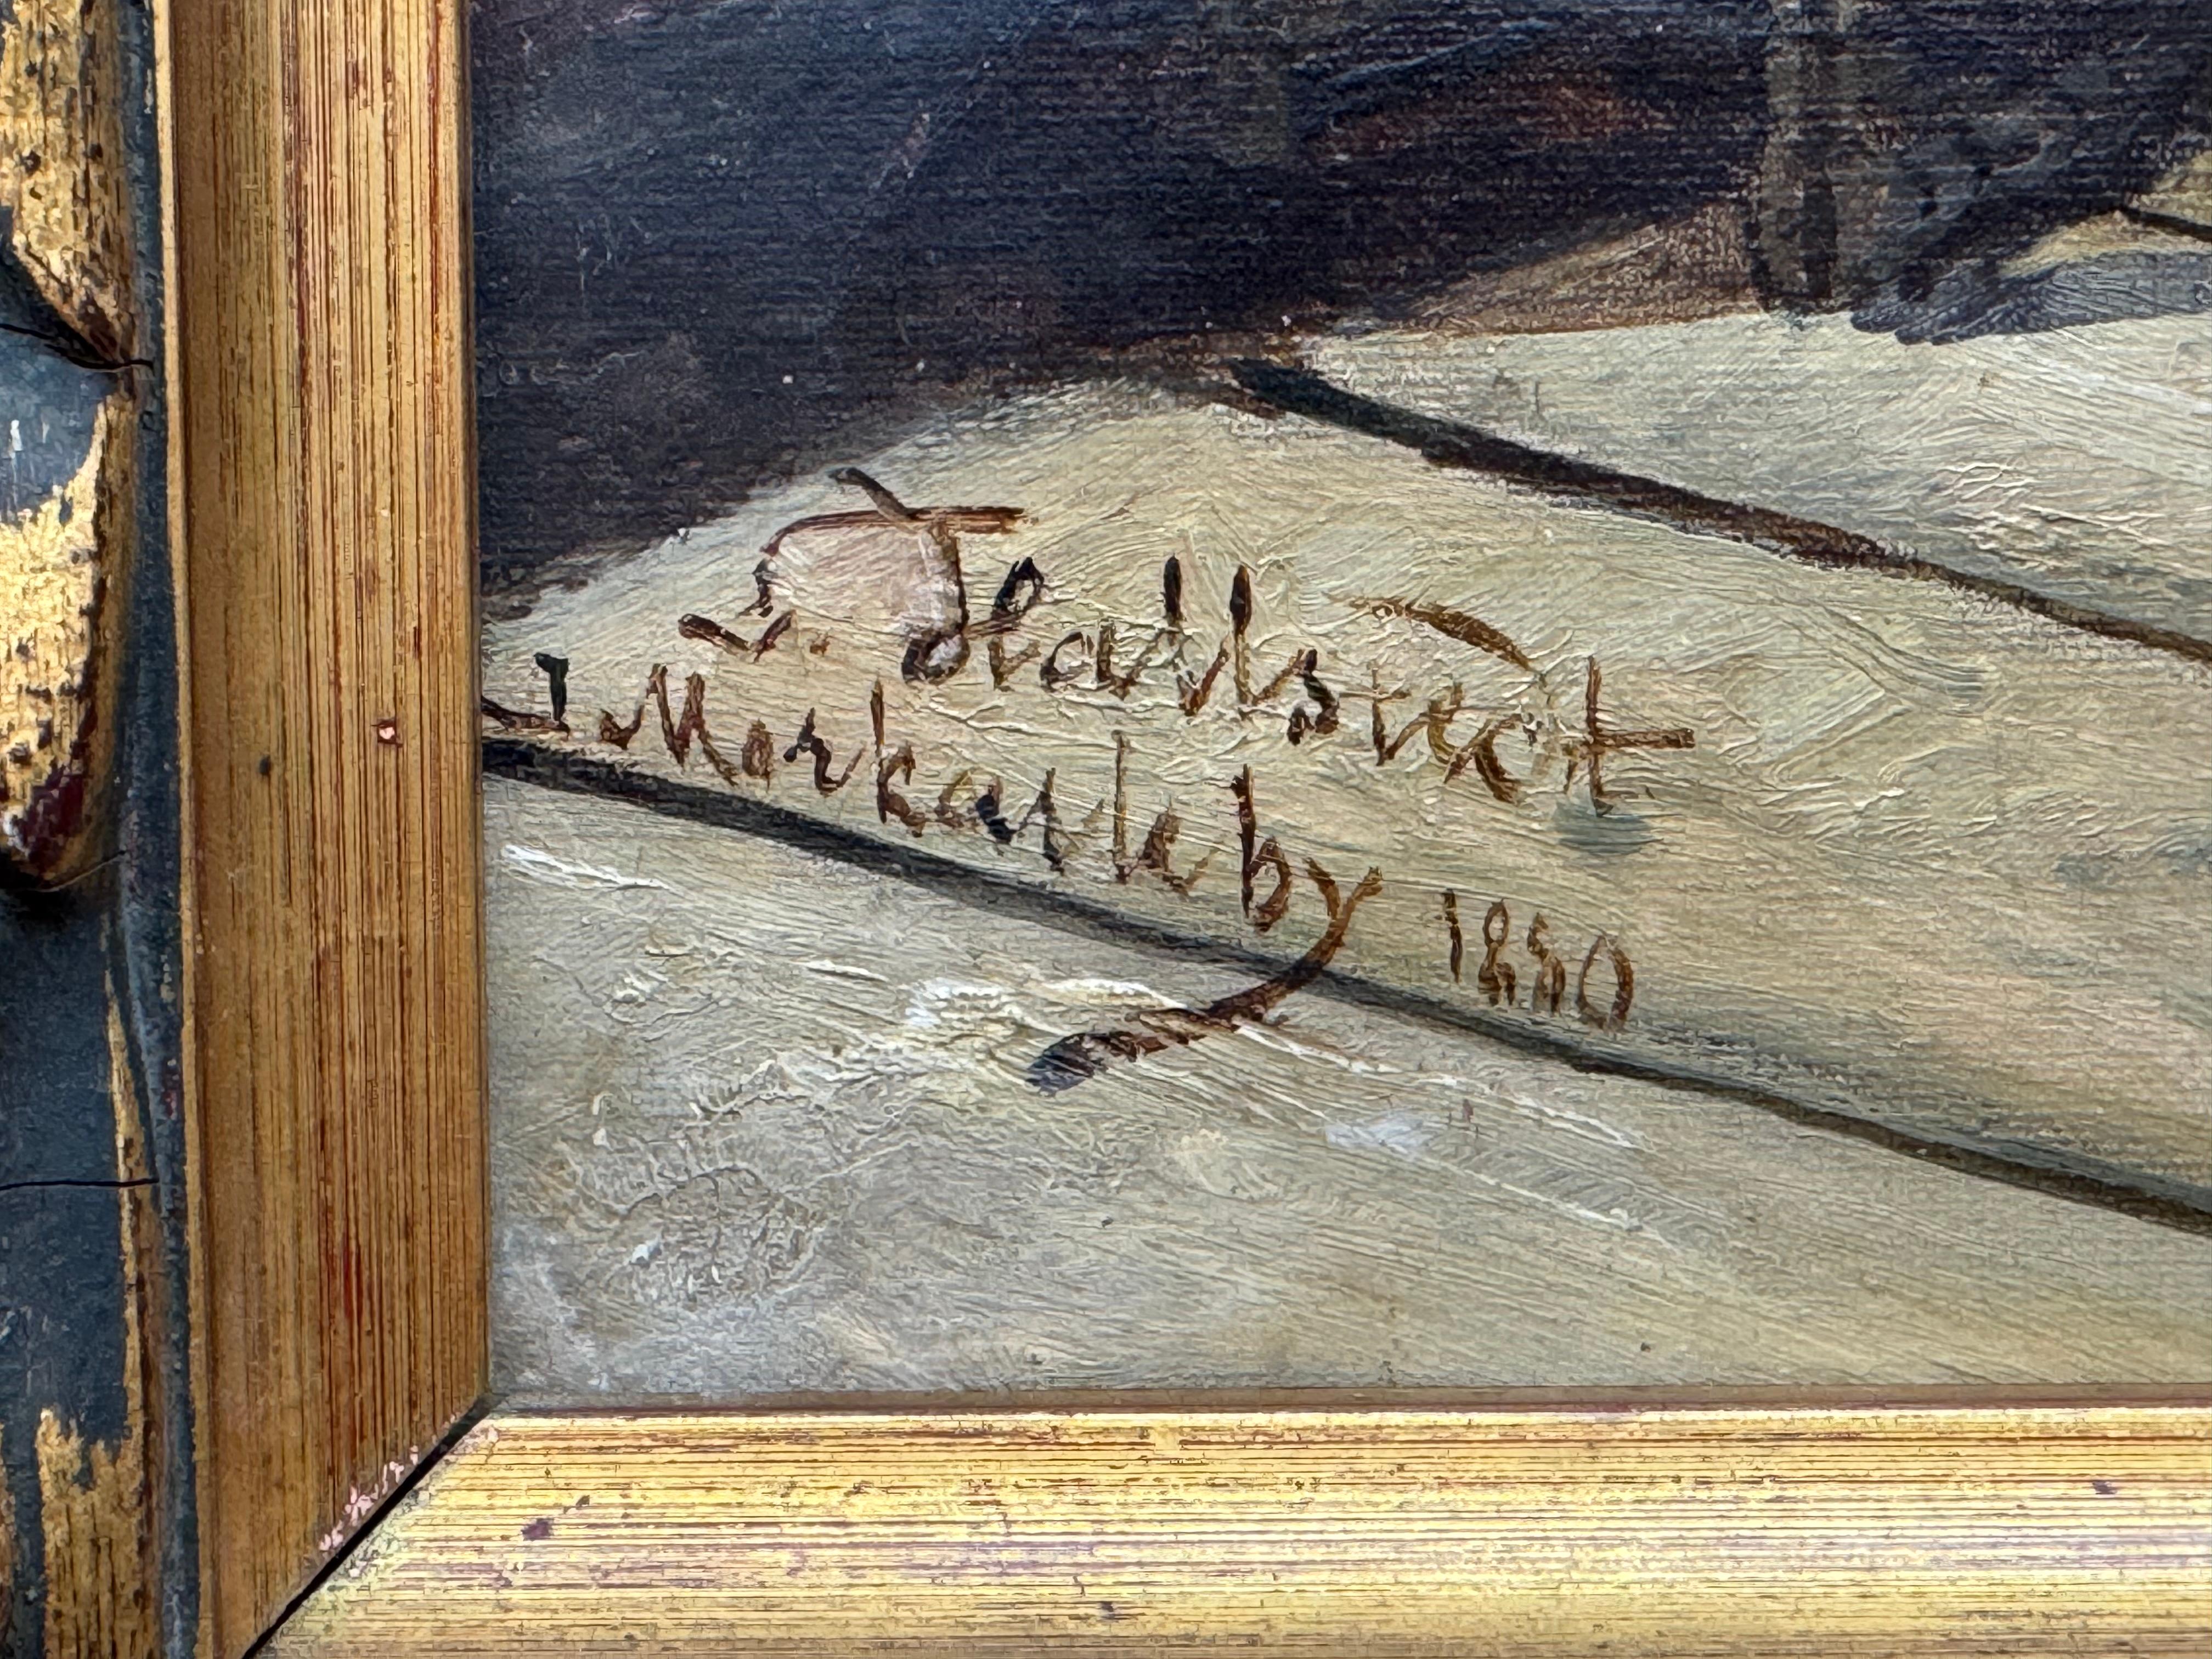 1880 cottage interior 

oil on canvas

14.75 x 19.25 unframed, 18.25 x 22.75 framed

Signature indecipherable 